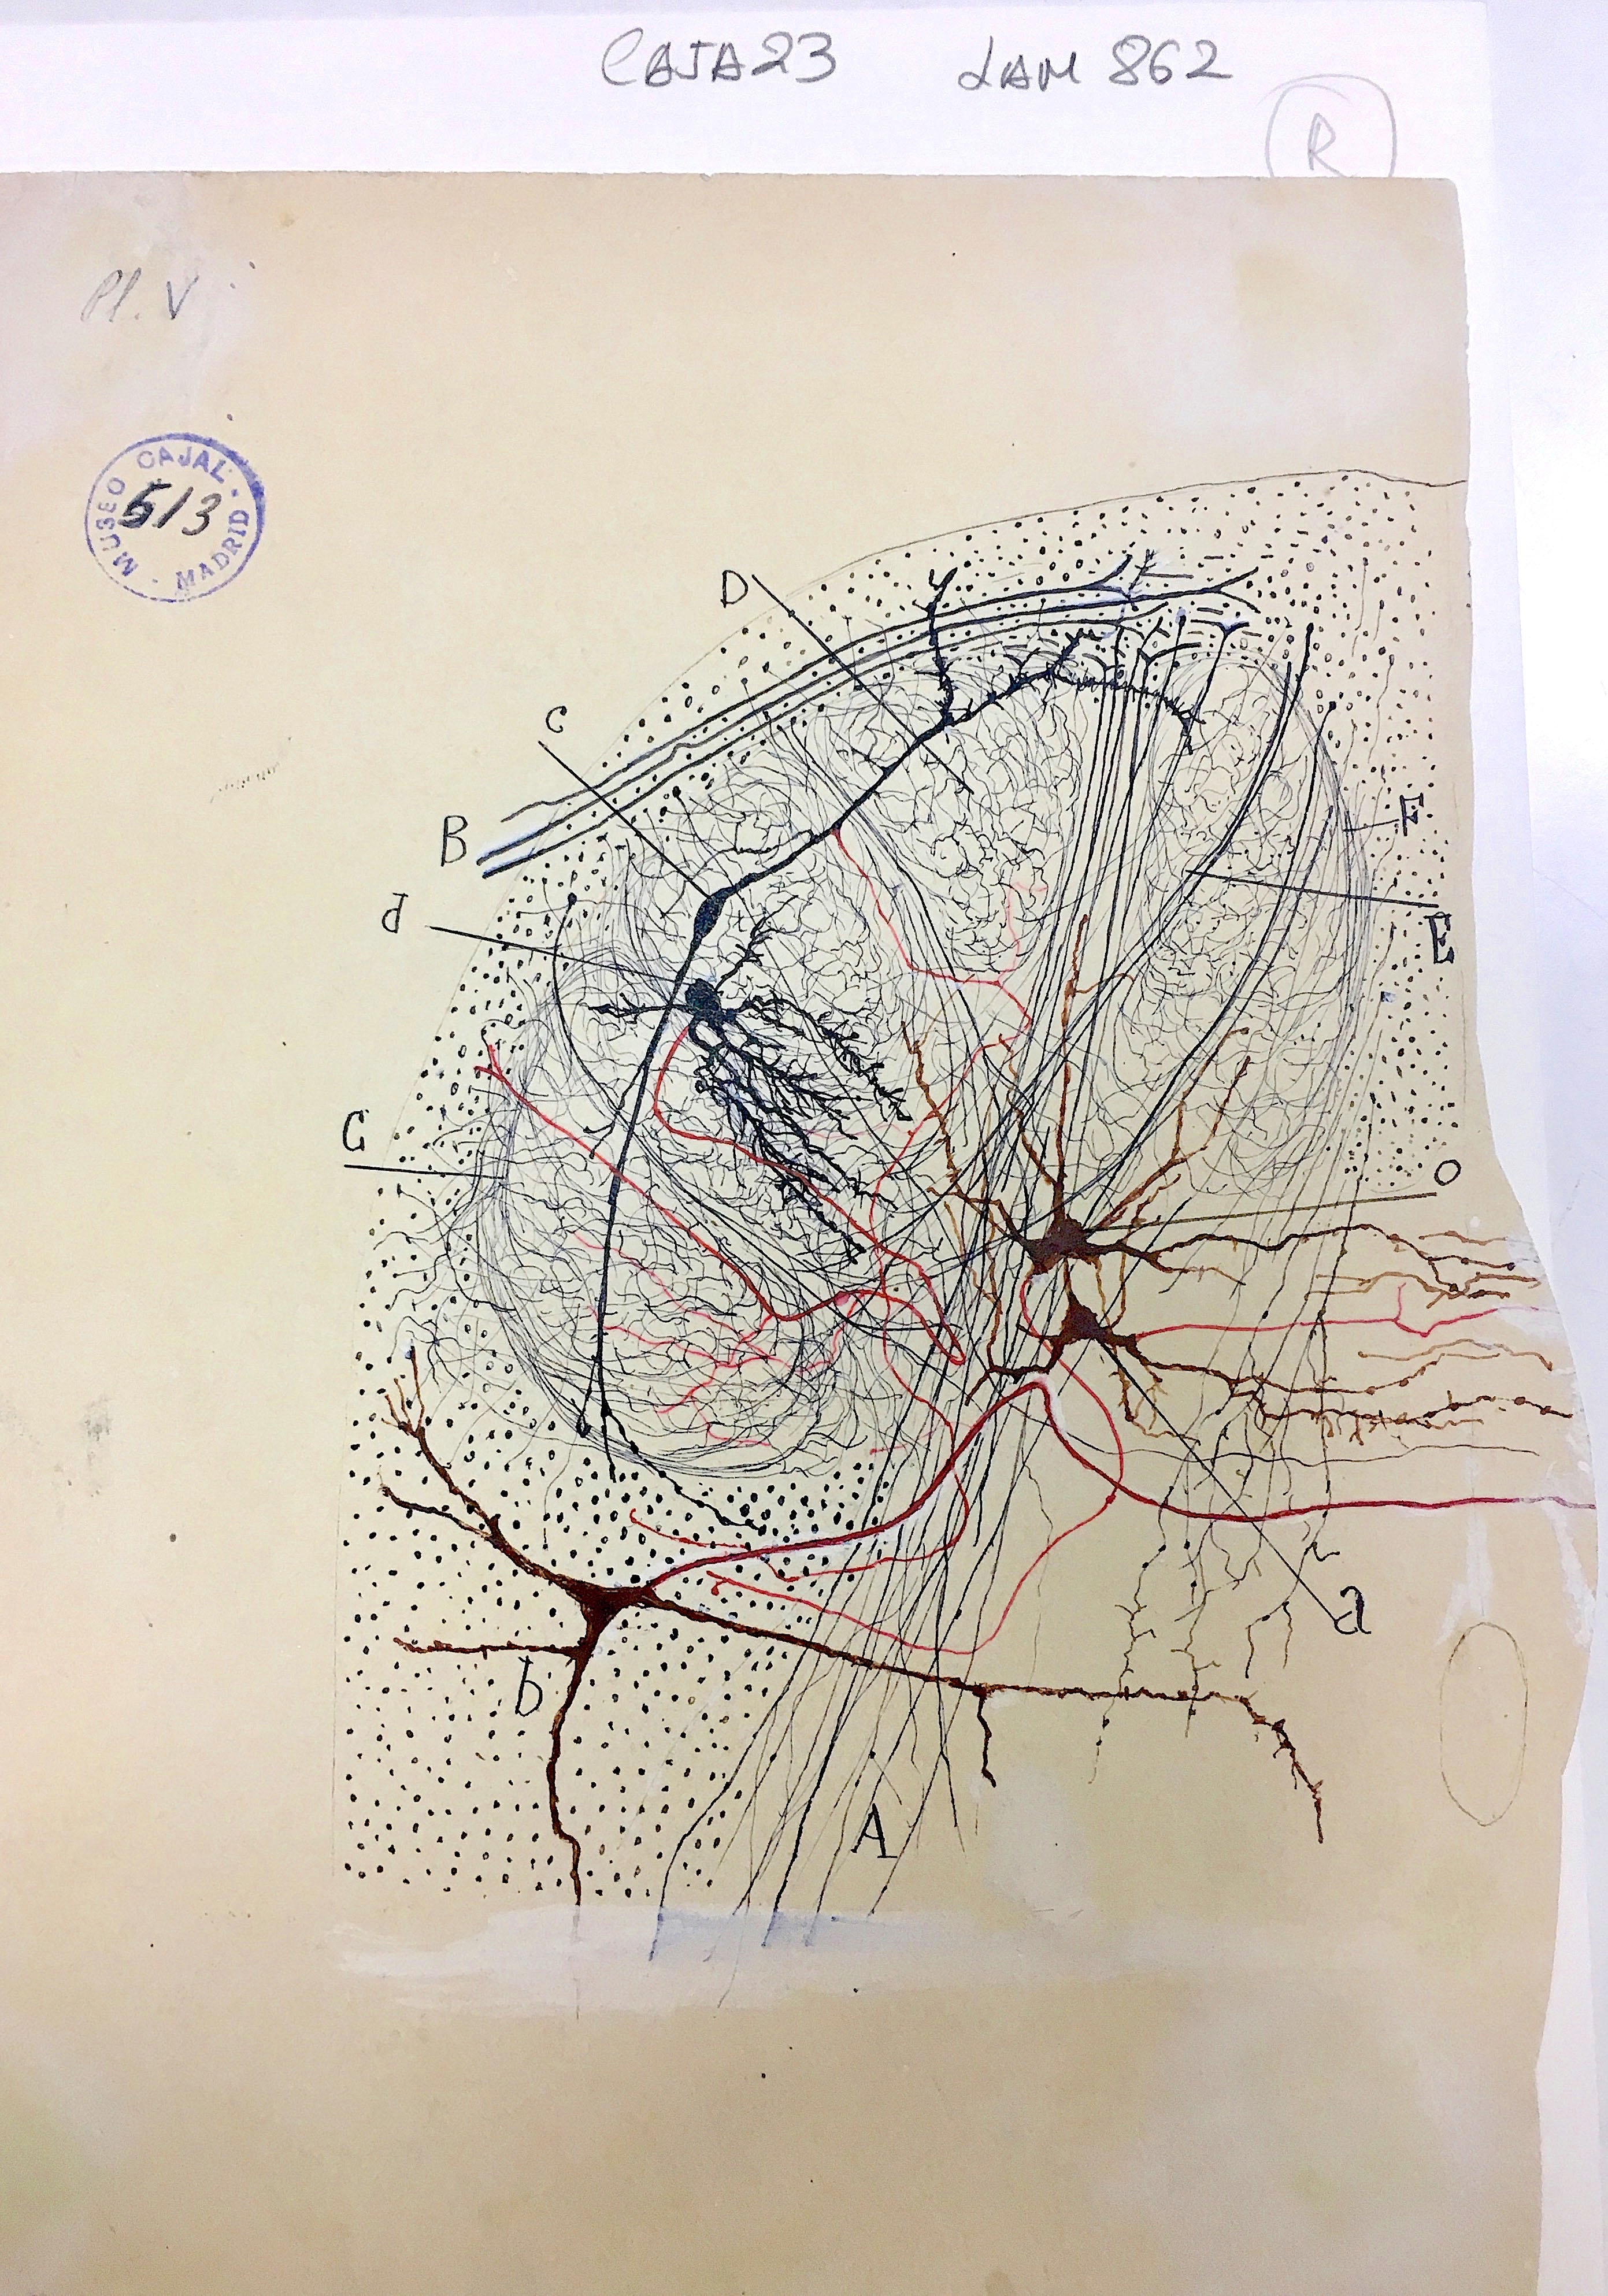 Hand-drawn illustration of cells of the substantia gelatinosa of Rolando